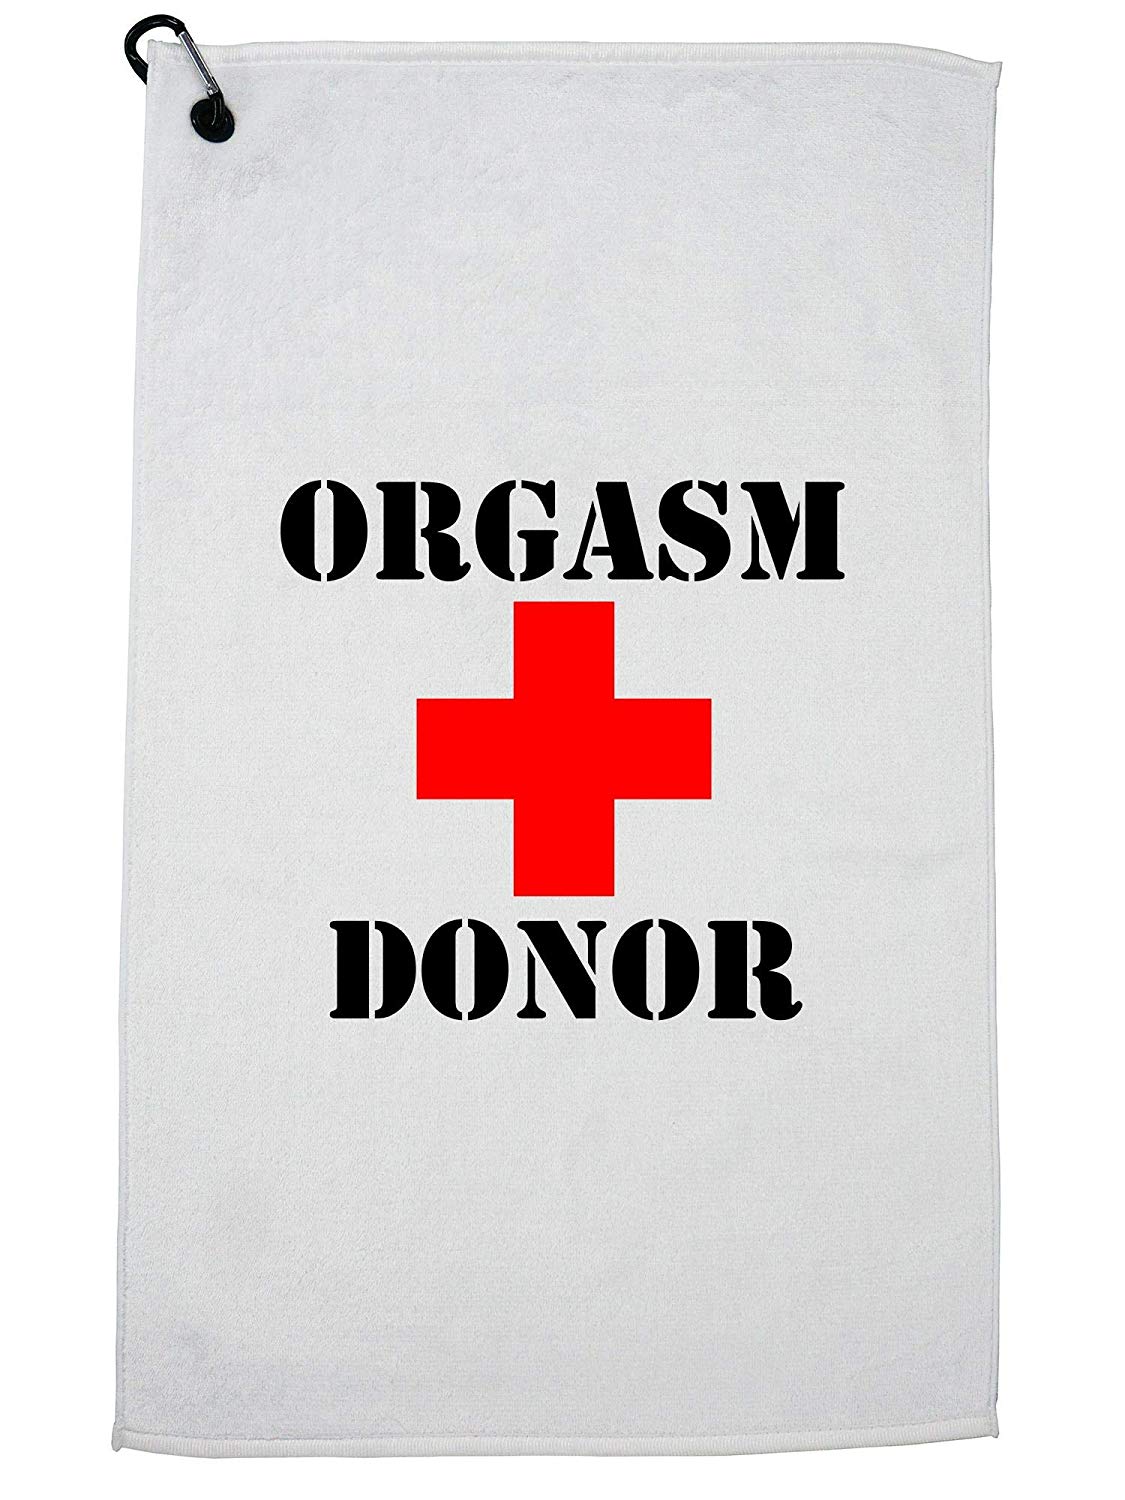 Red Cross Lifeguard Logo - Amazon.com : Hollywood Thread Orgasm Donor Red Cross